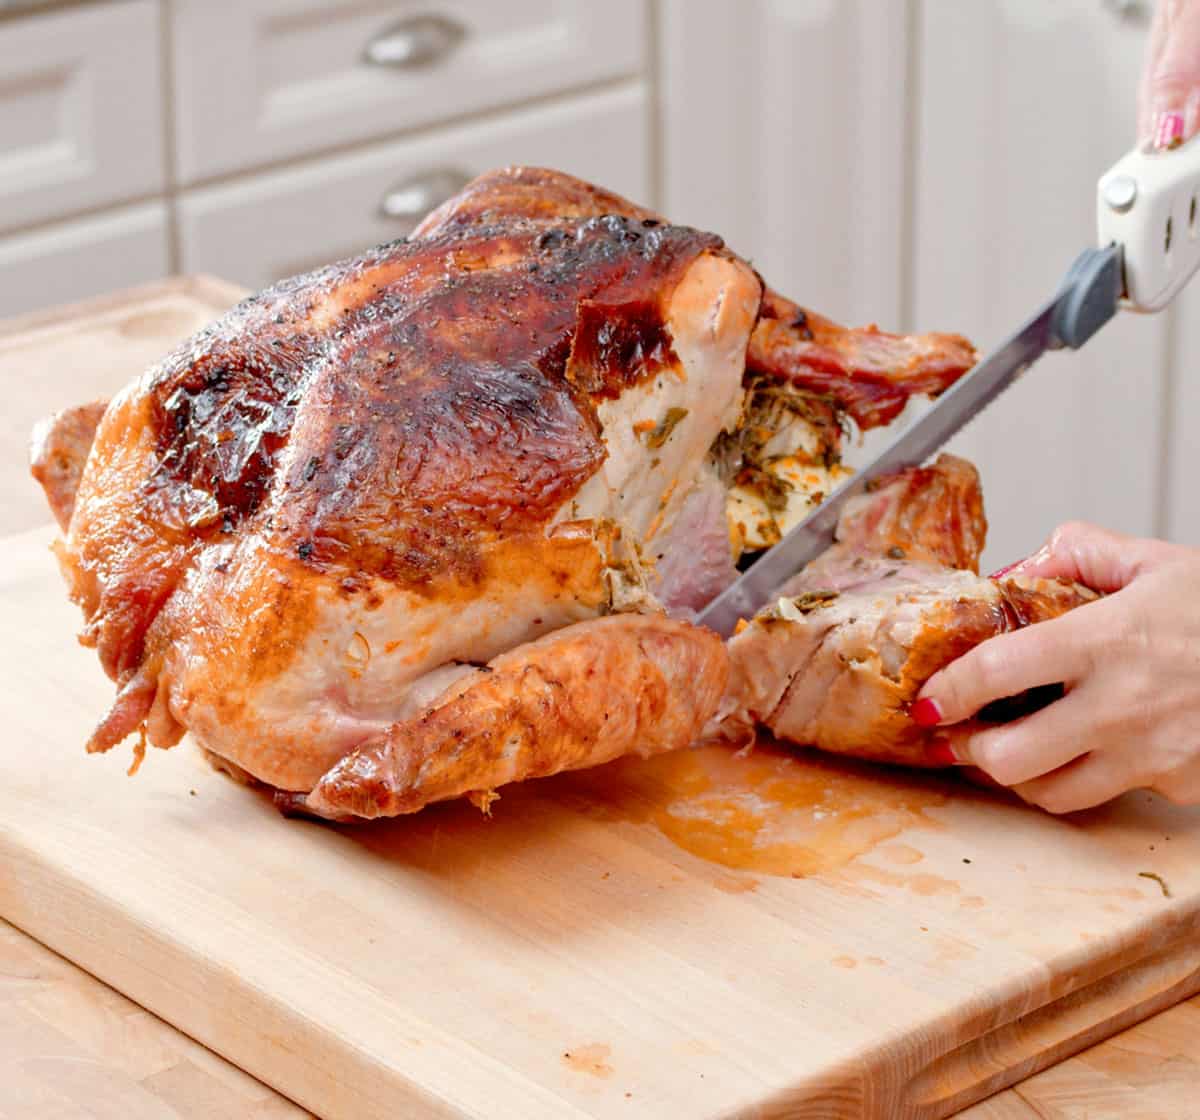 Leg being cut off a roast turkey on a cutting board with an electric knife.